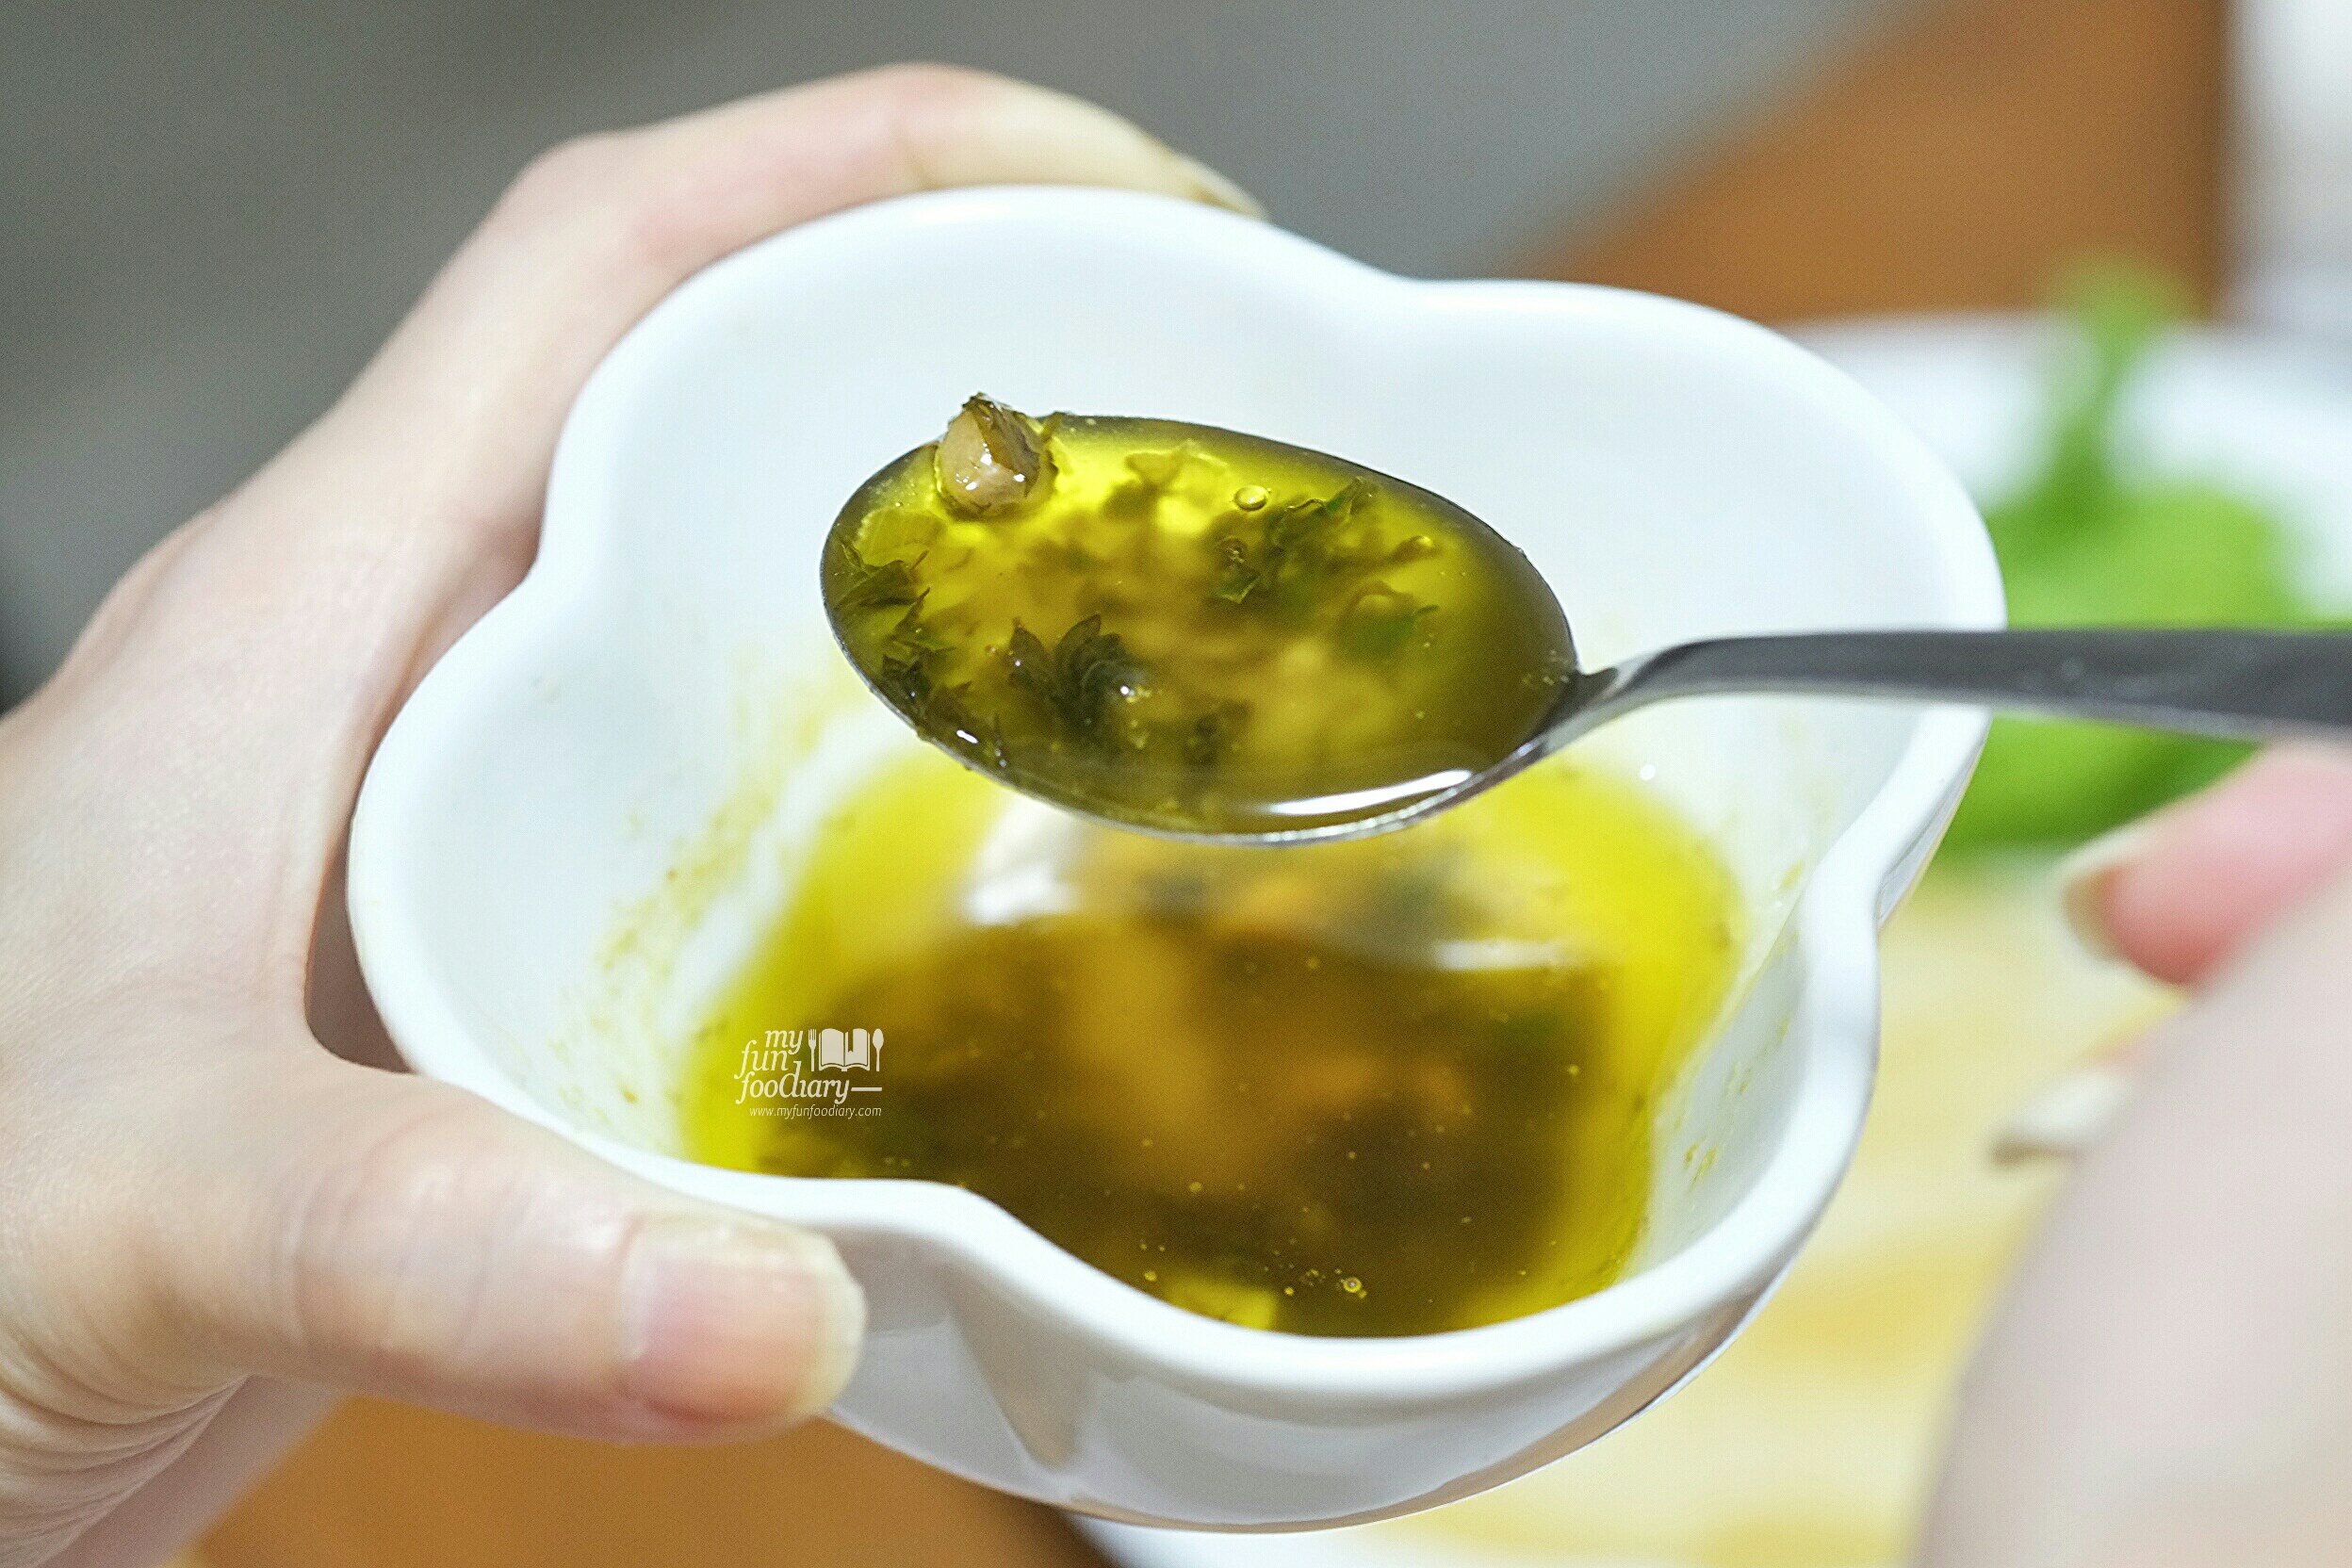 Lemon Butter Sauce at my kitchen by Myfunfoodiary